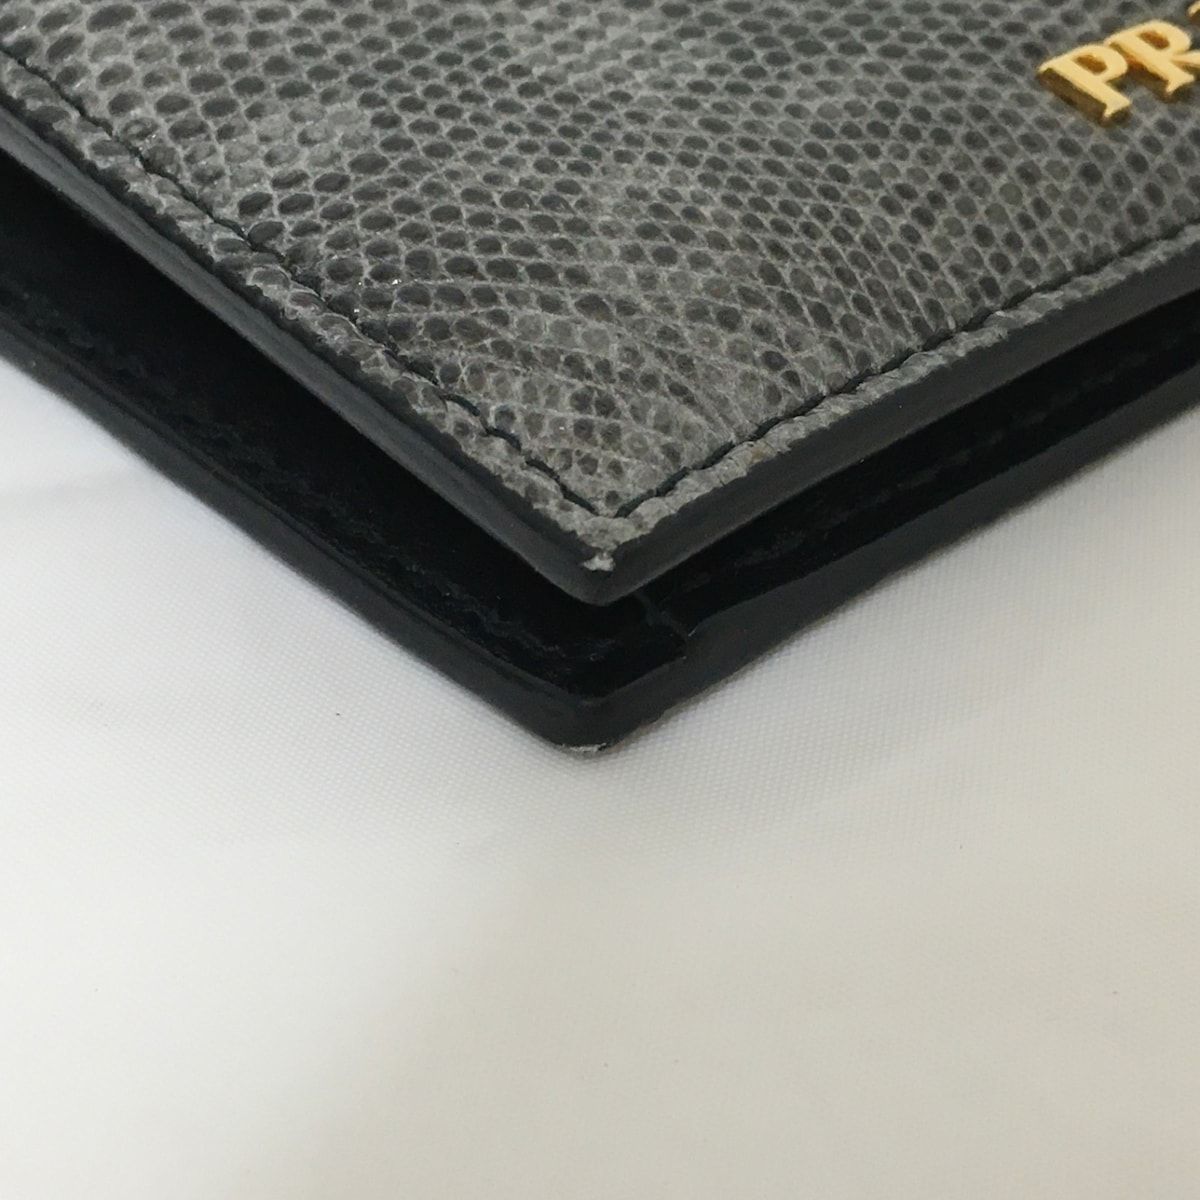 PRADA(プラダ) 2つ折り財布美品 - 1MV204 グレー×黒 レザー - メルカリ